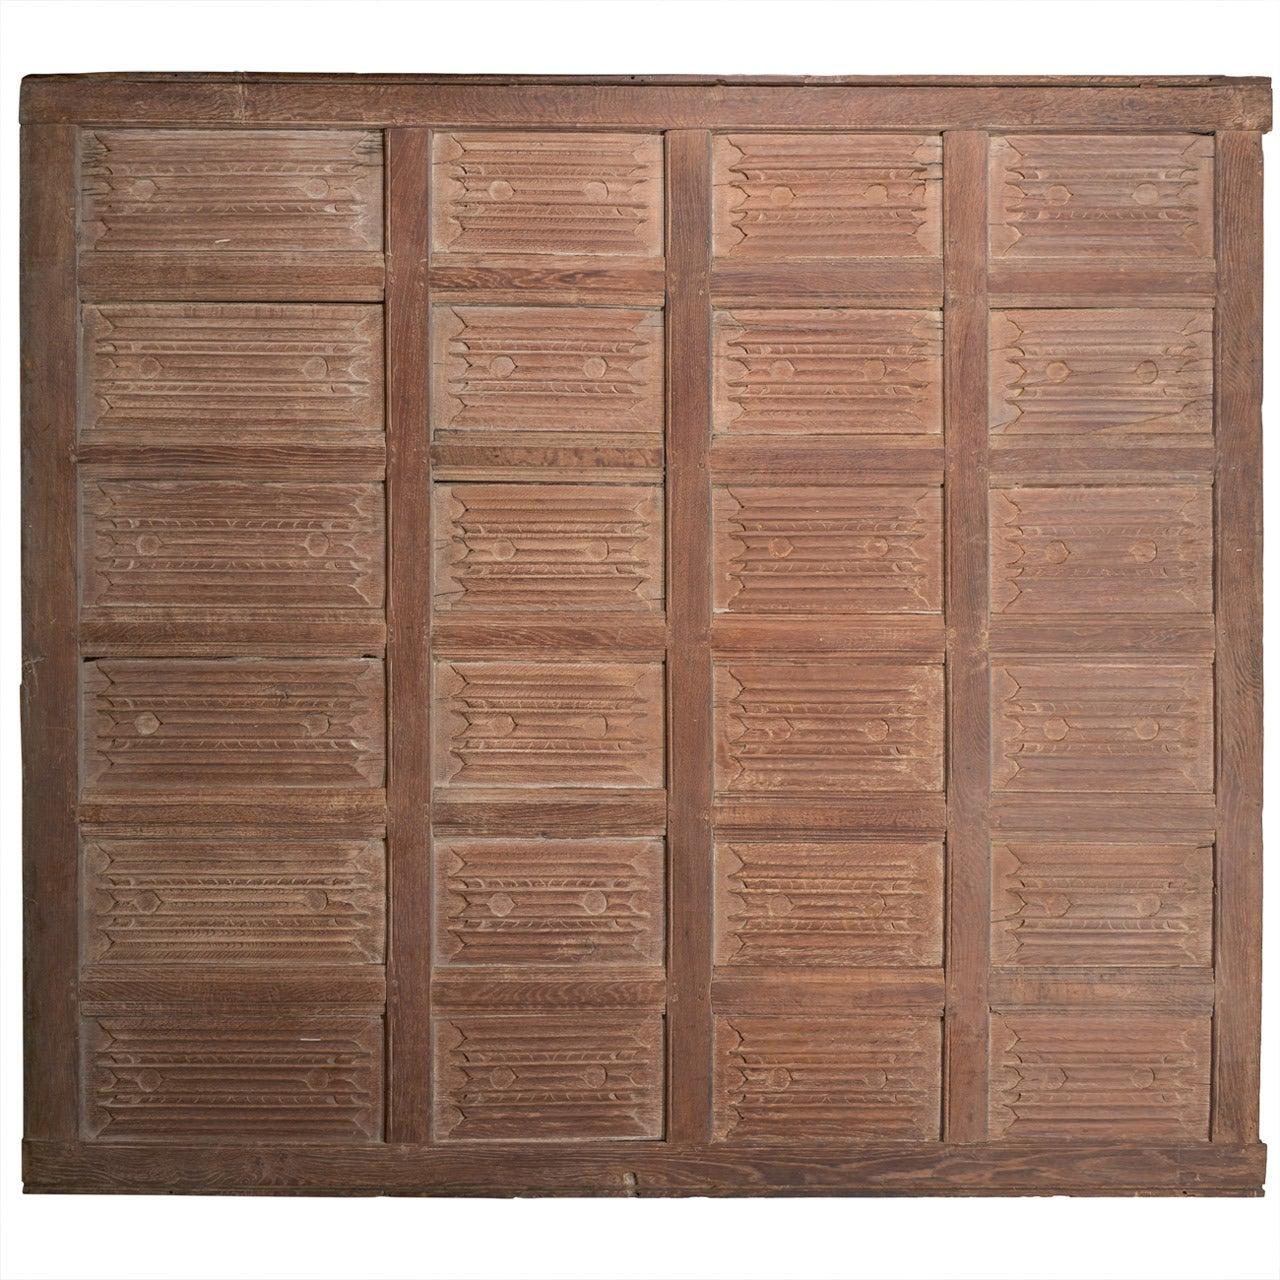 Set of Eleven 16th Century Carved Linenfold Wood Panels